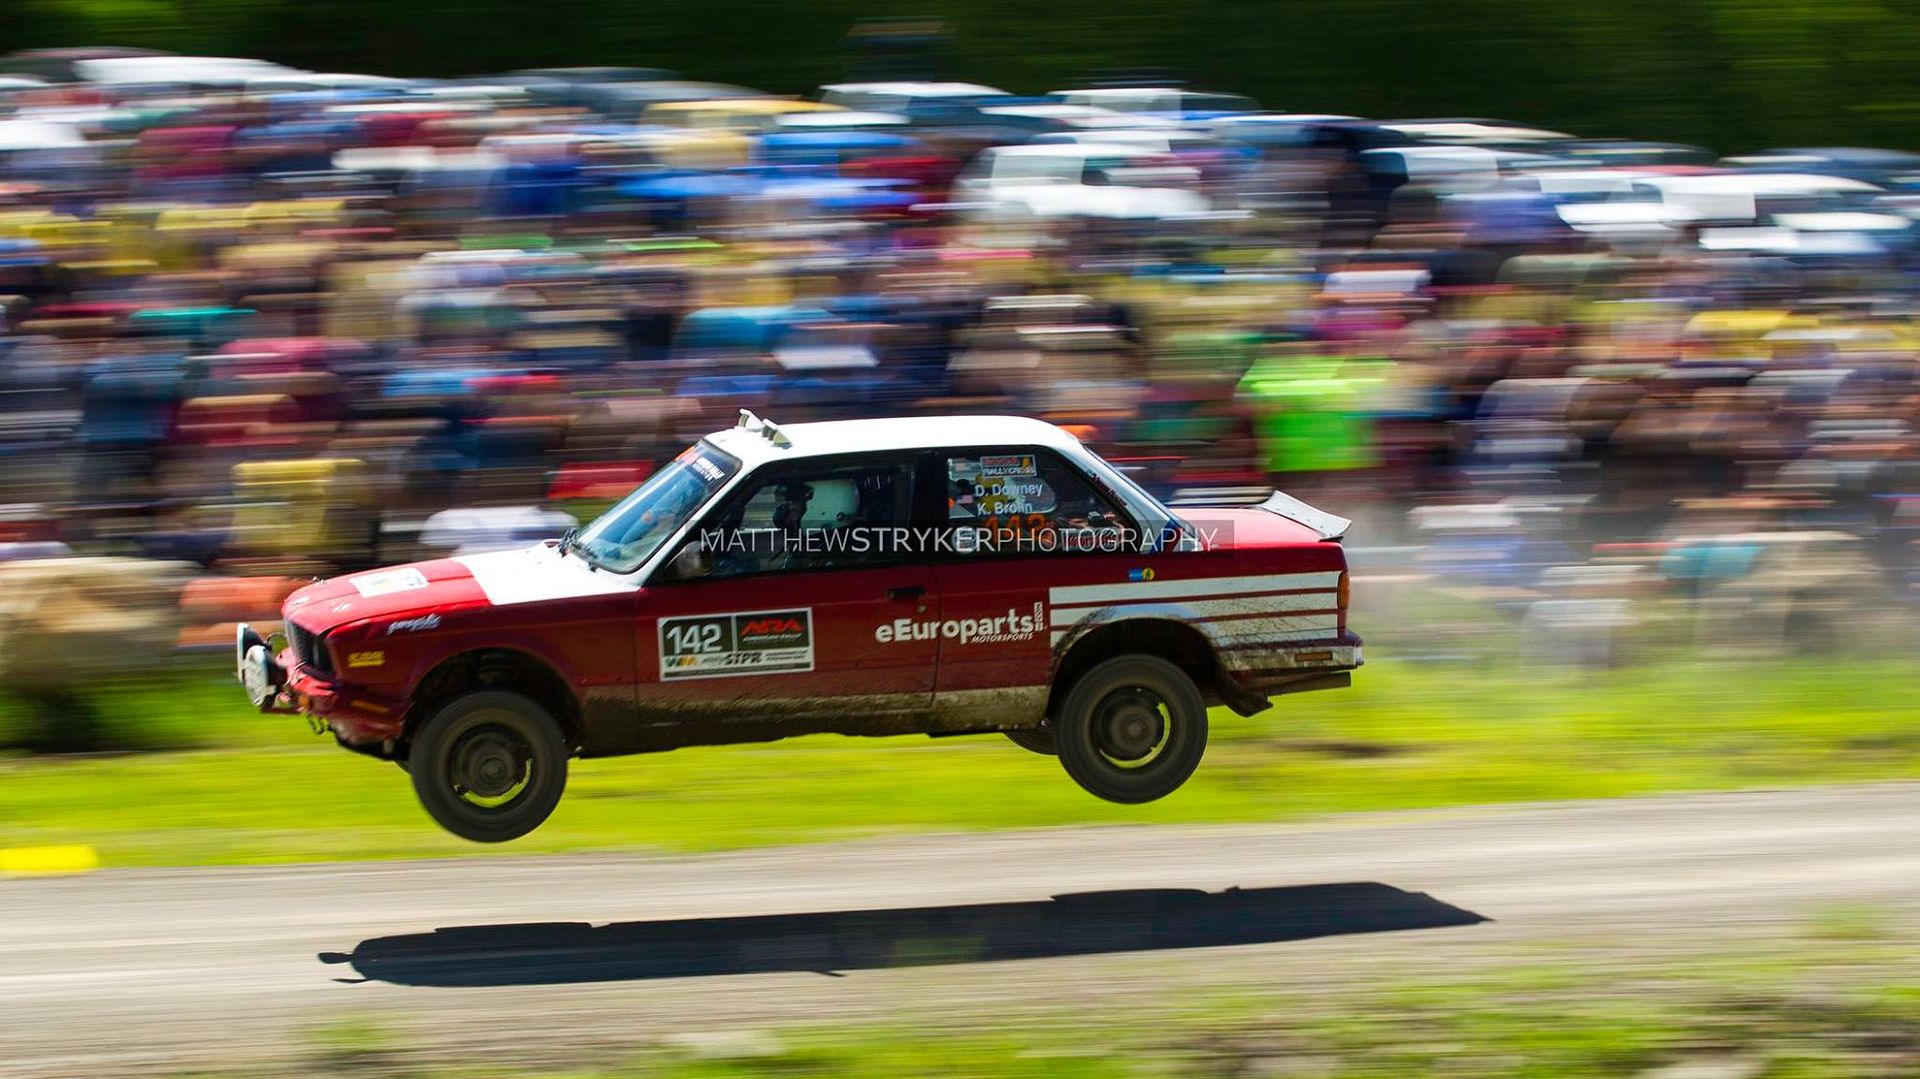 Thinking of subaru as rally project car| Grassroots Motorsports forum |